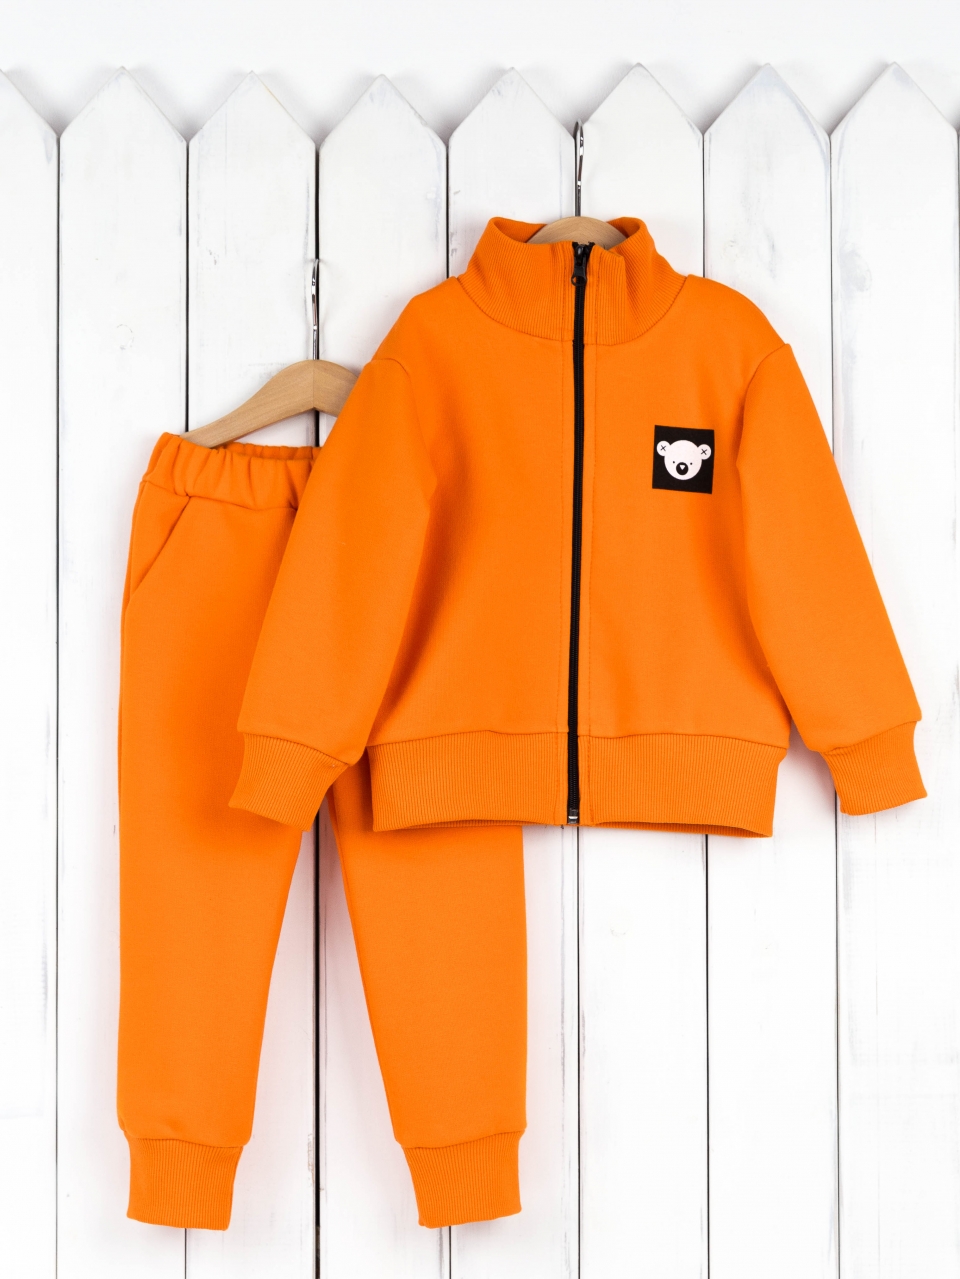 КД475/1-Ф Комплект детский р. 92 (футер 3-х нитка петля/куртка+брюки/апельсин) Бэби бум